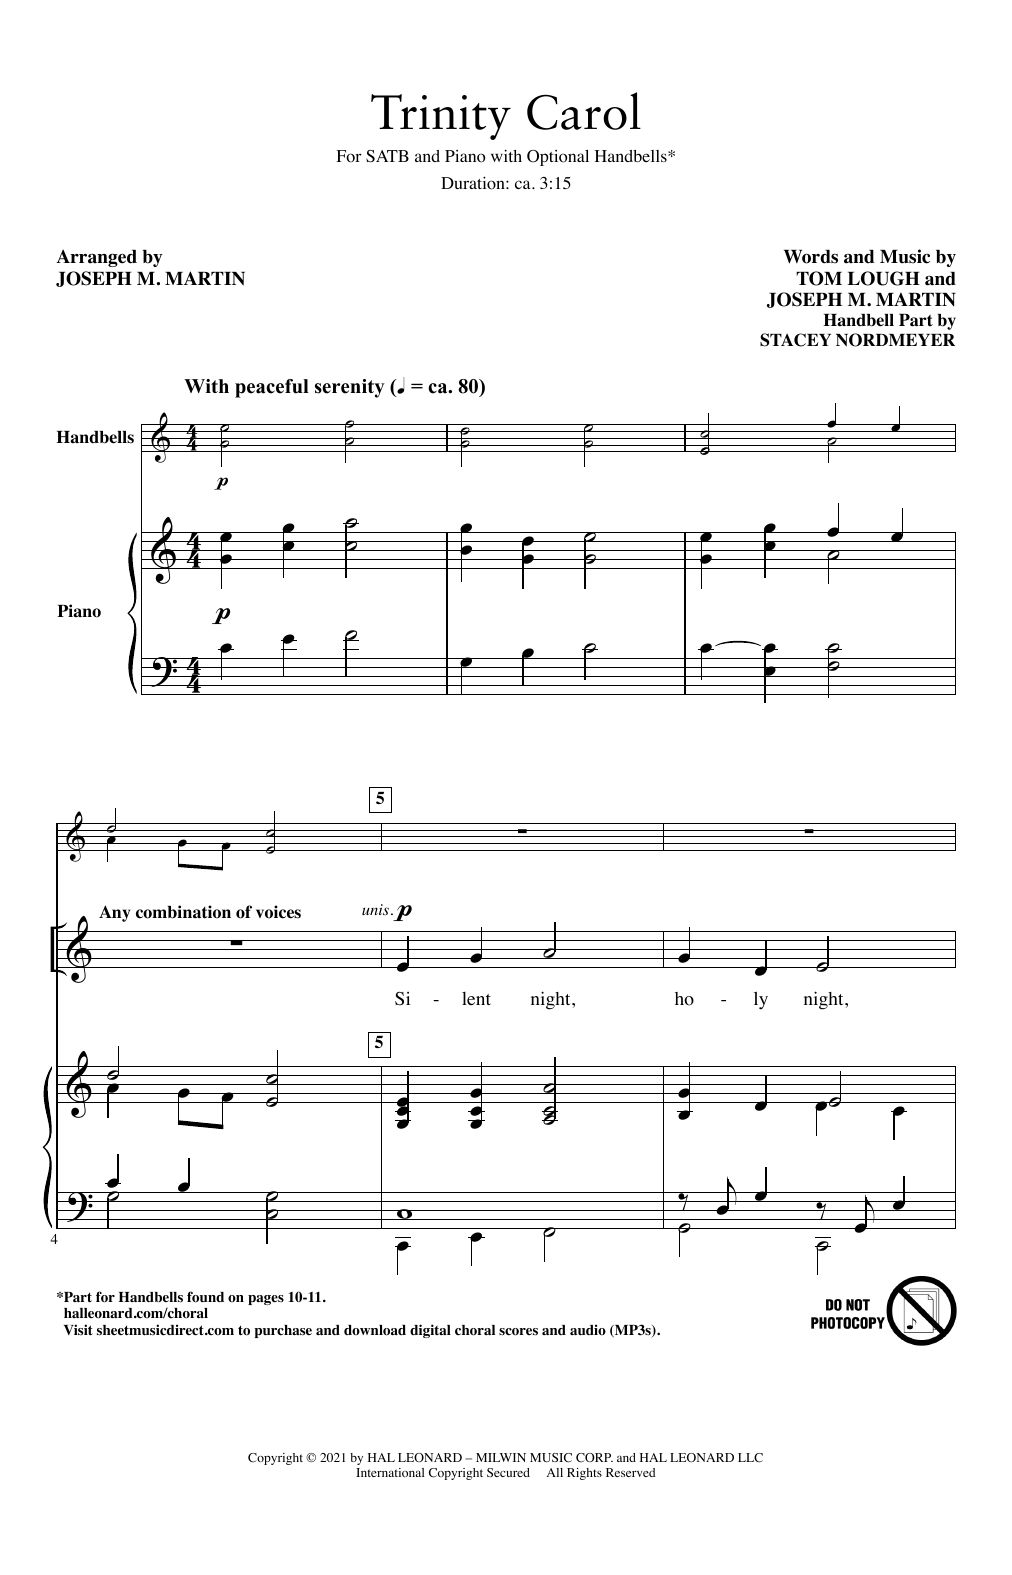 Tom Lough and Joseph M. Martin Trinity Carol (arr. Joseph M. Martin) Sheet Music Notes & Chords for SATB Choir - Download or Print PDF